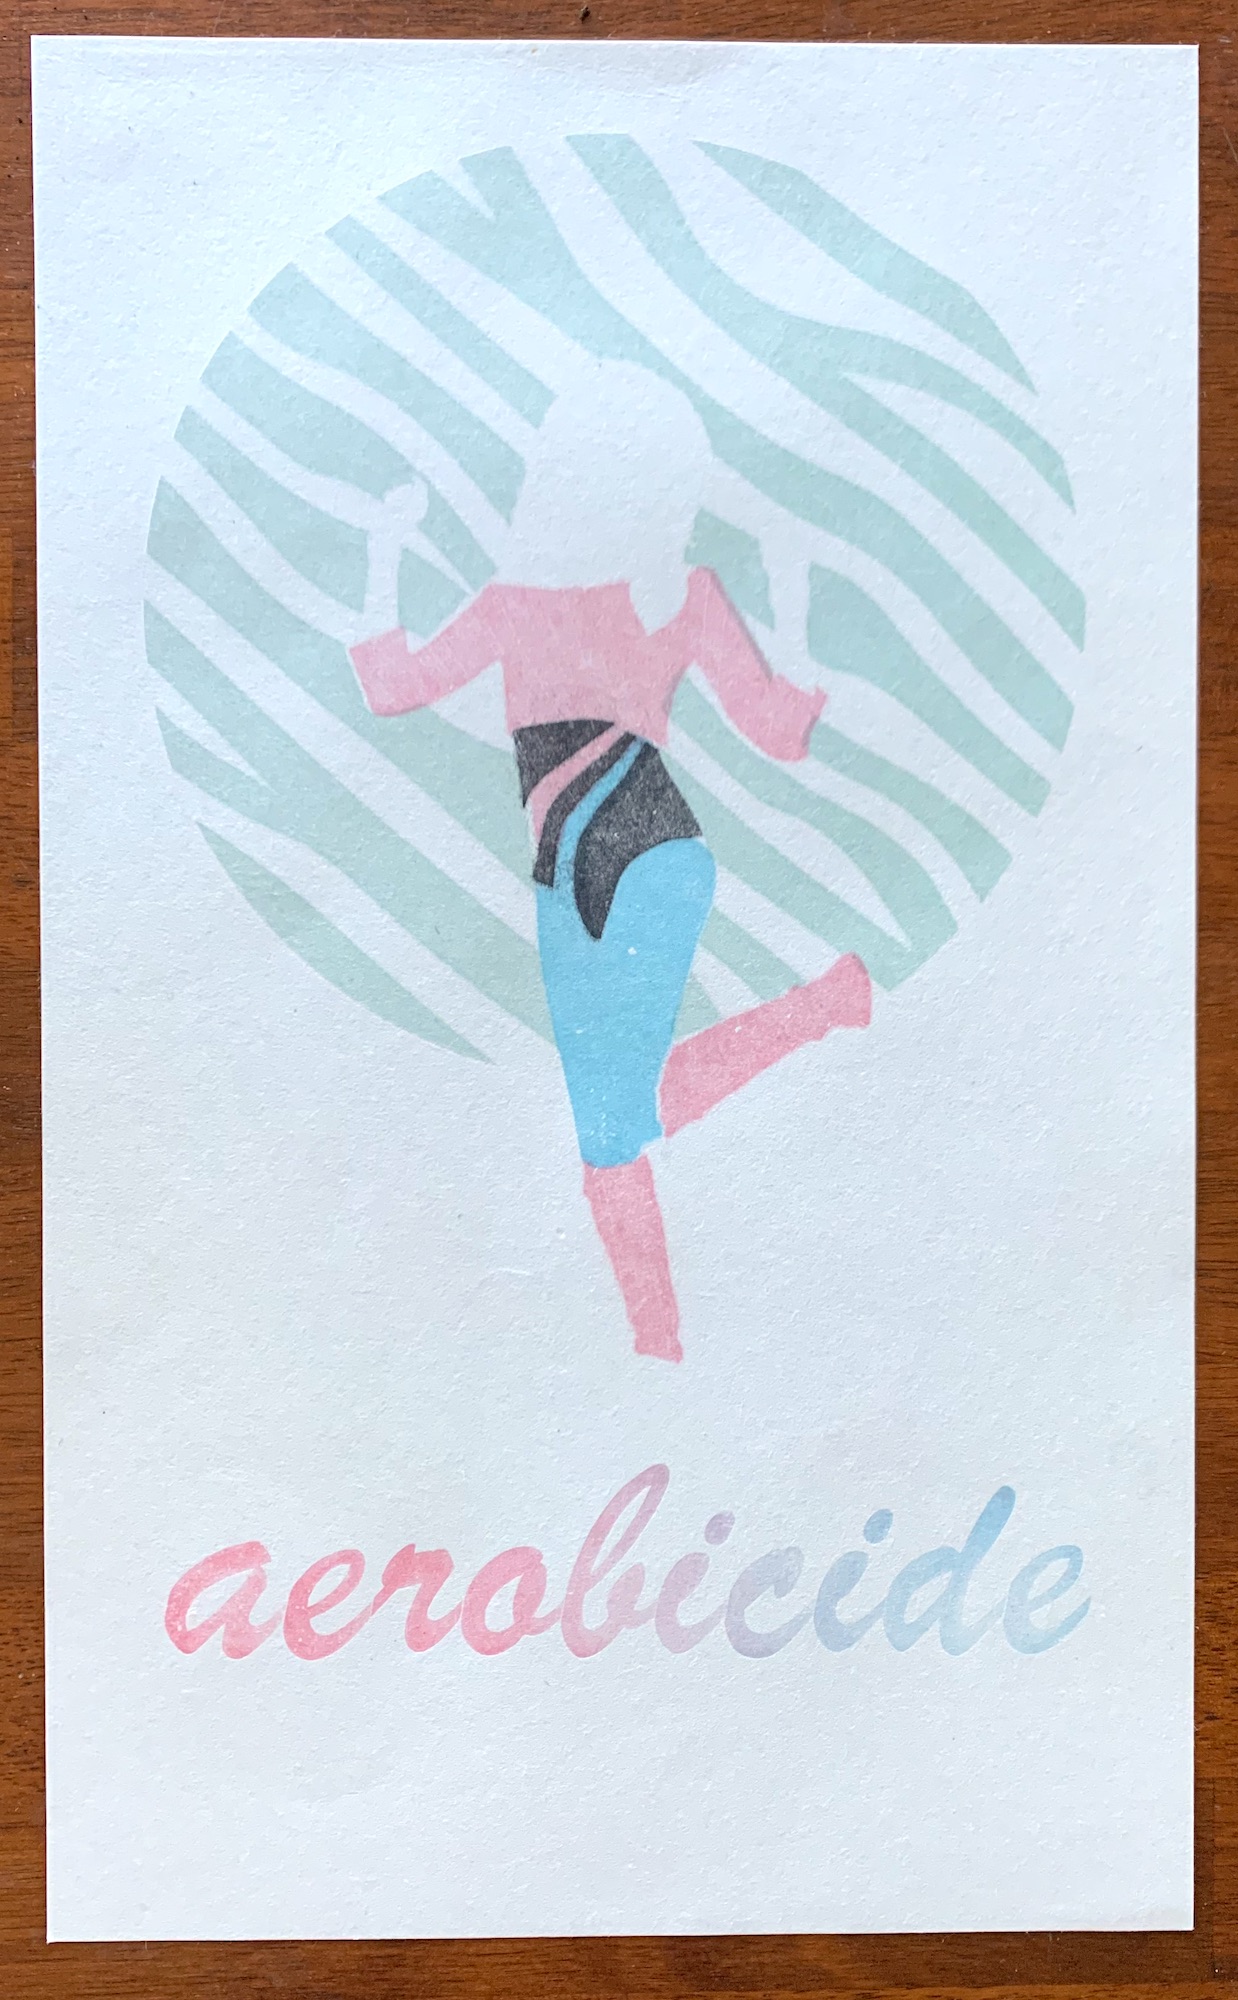 Aerobicide Poster